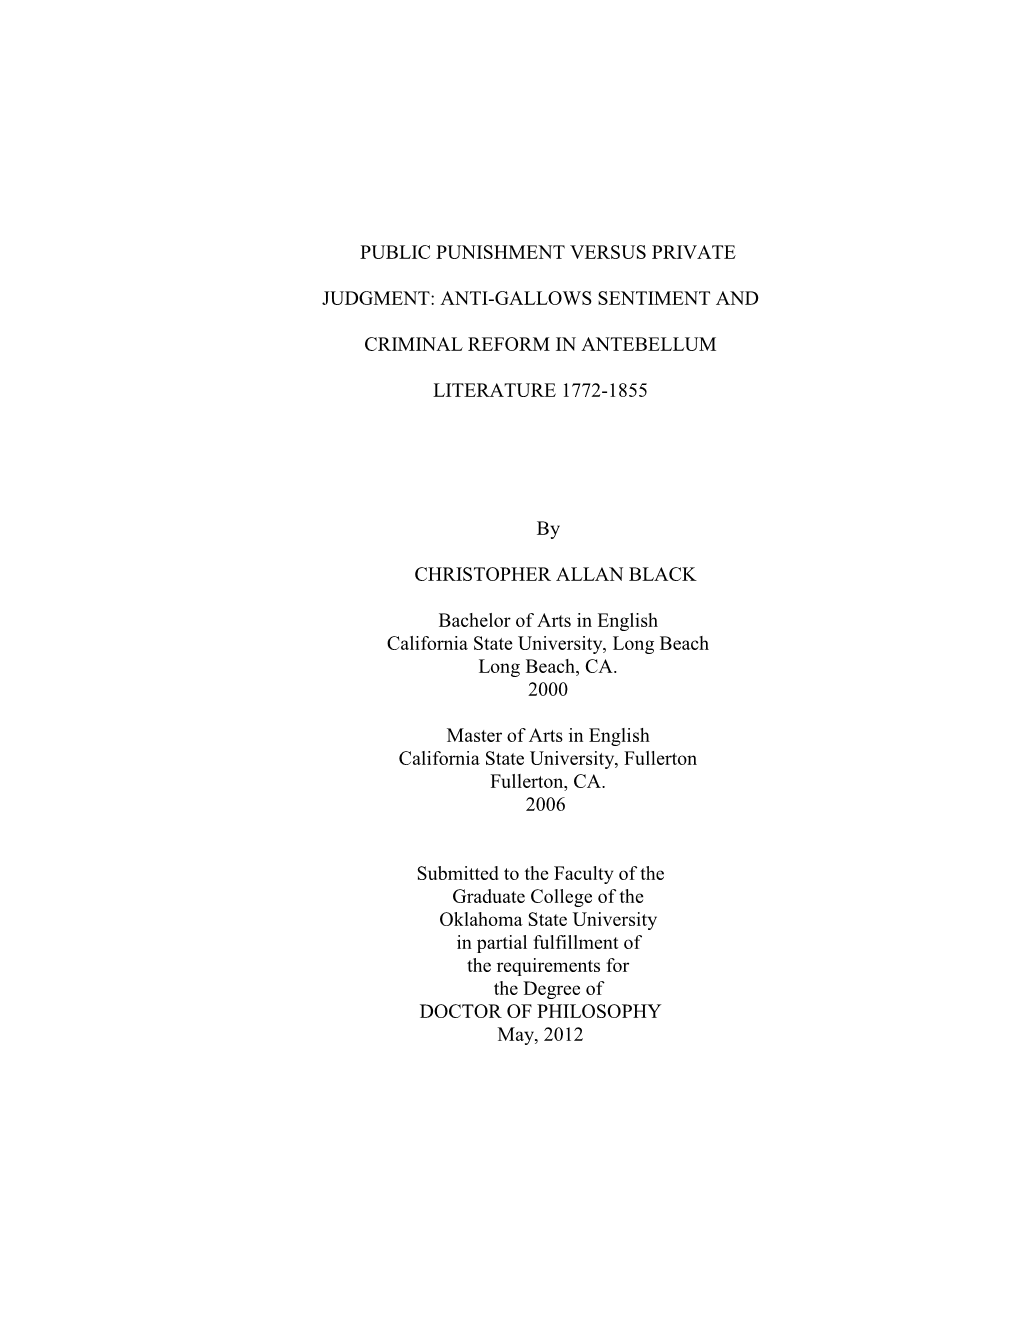 Anti-Gallows Sentiment and Criminal Reform in Antebellum Literature 1772- 1855